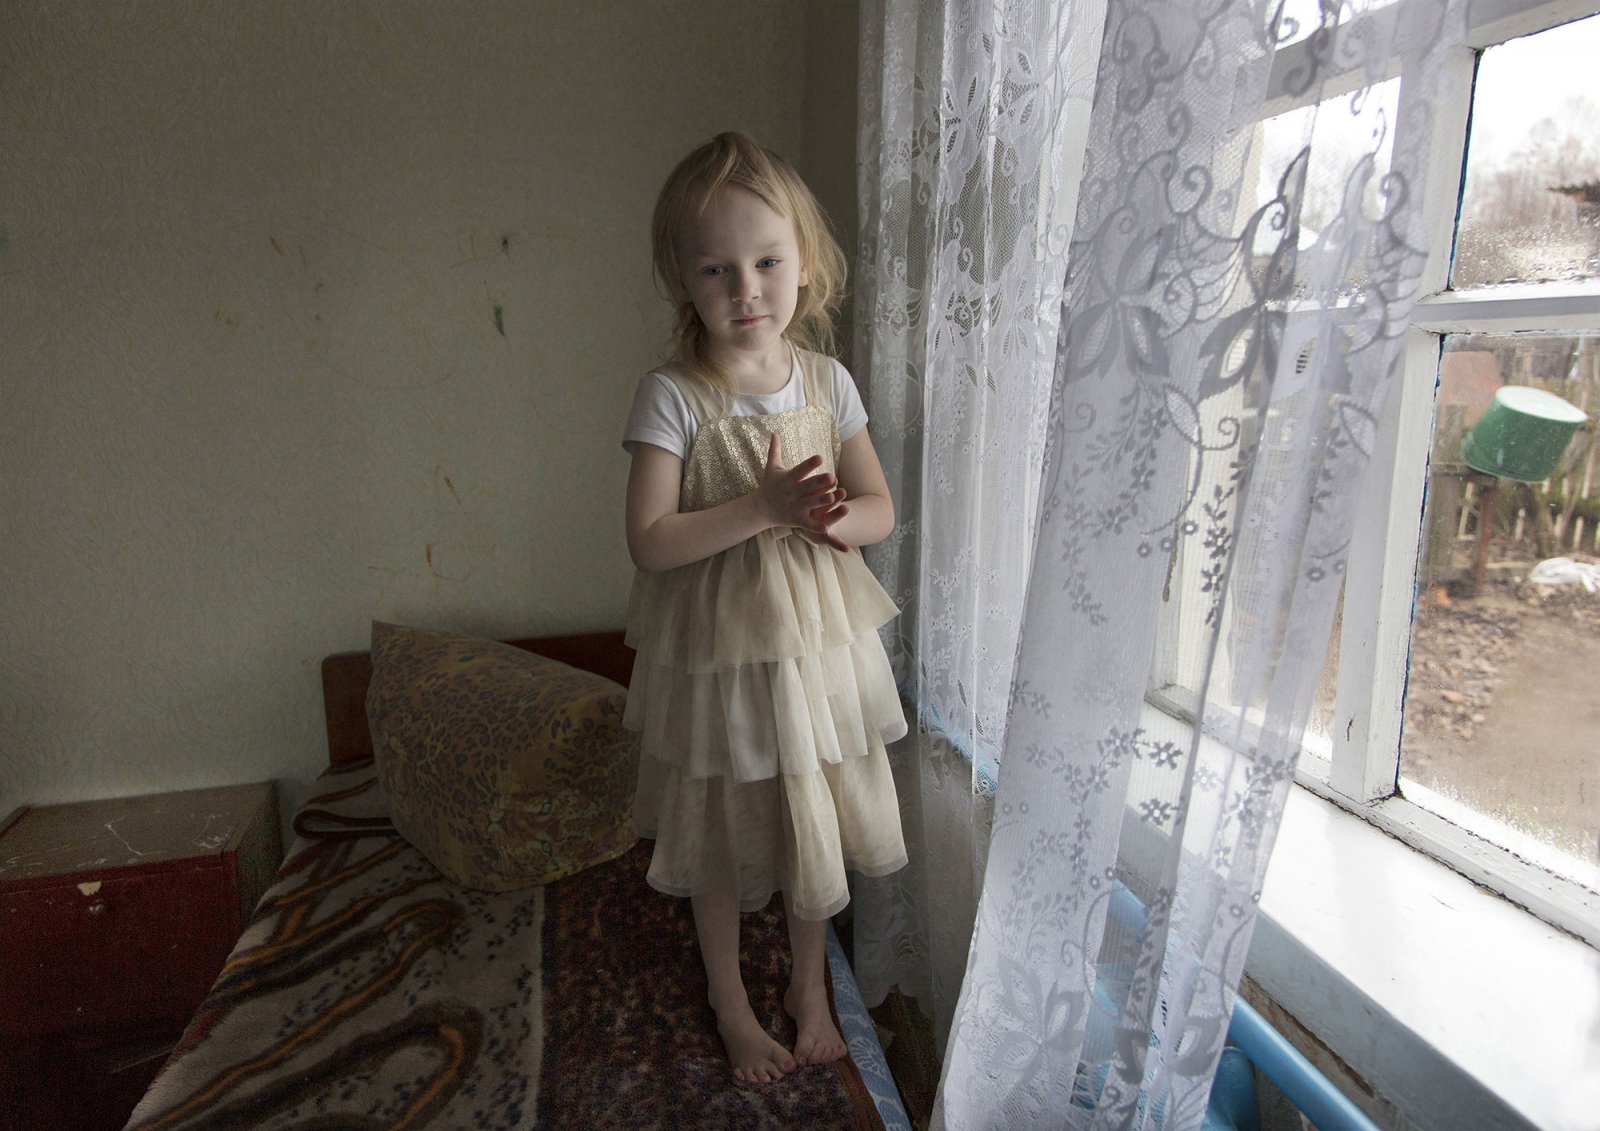  Iana Vasilieva, 6 years old, a...he latest conflicts in Ukraine 